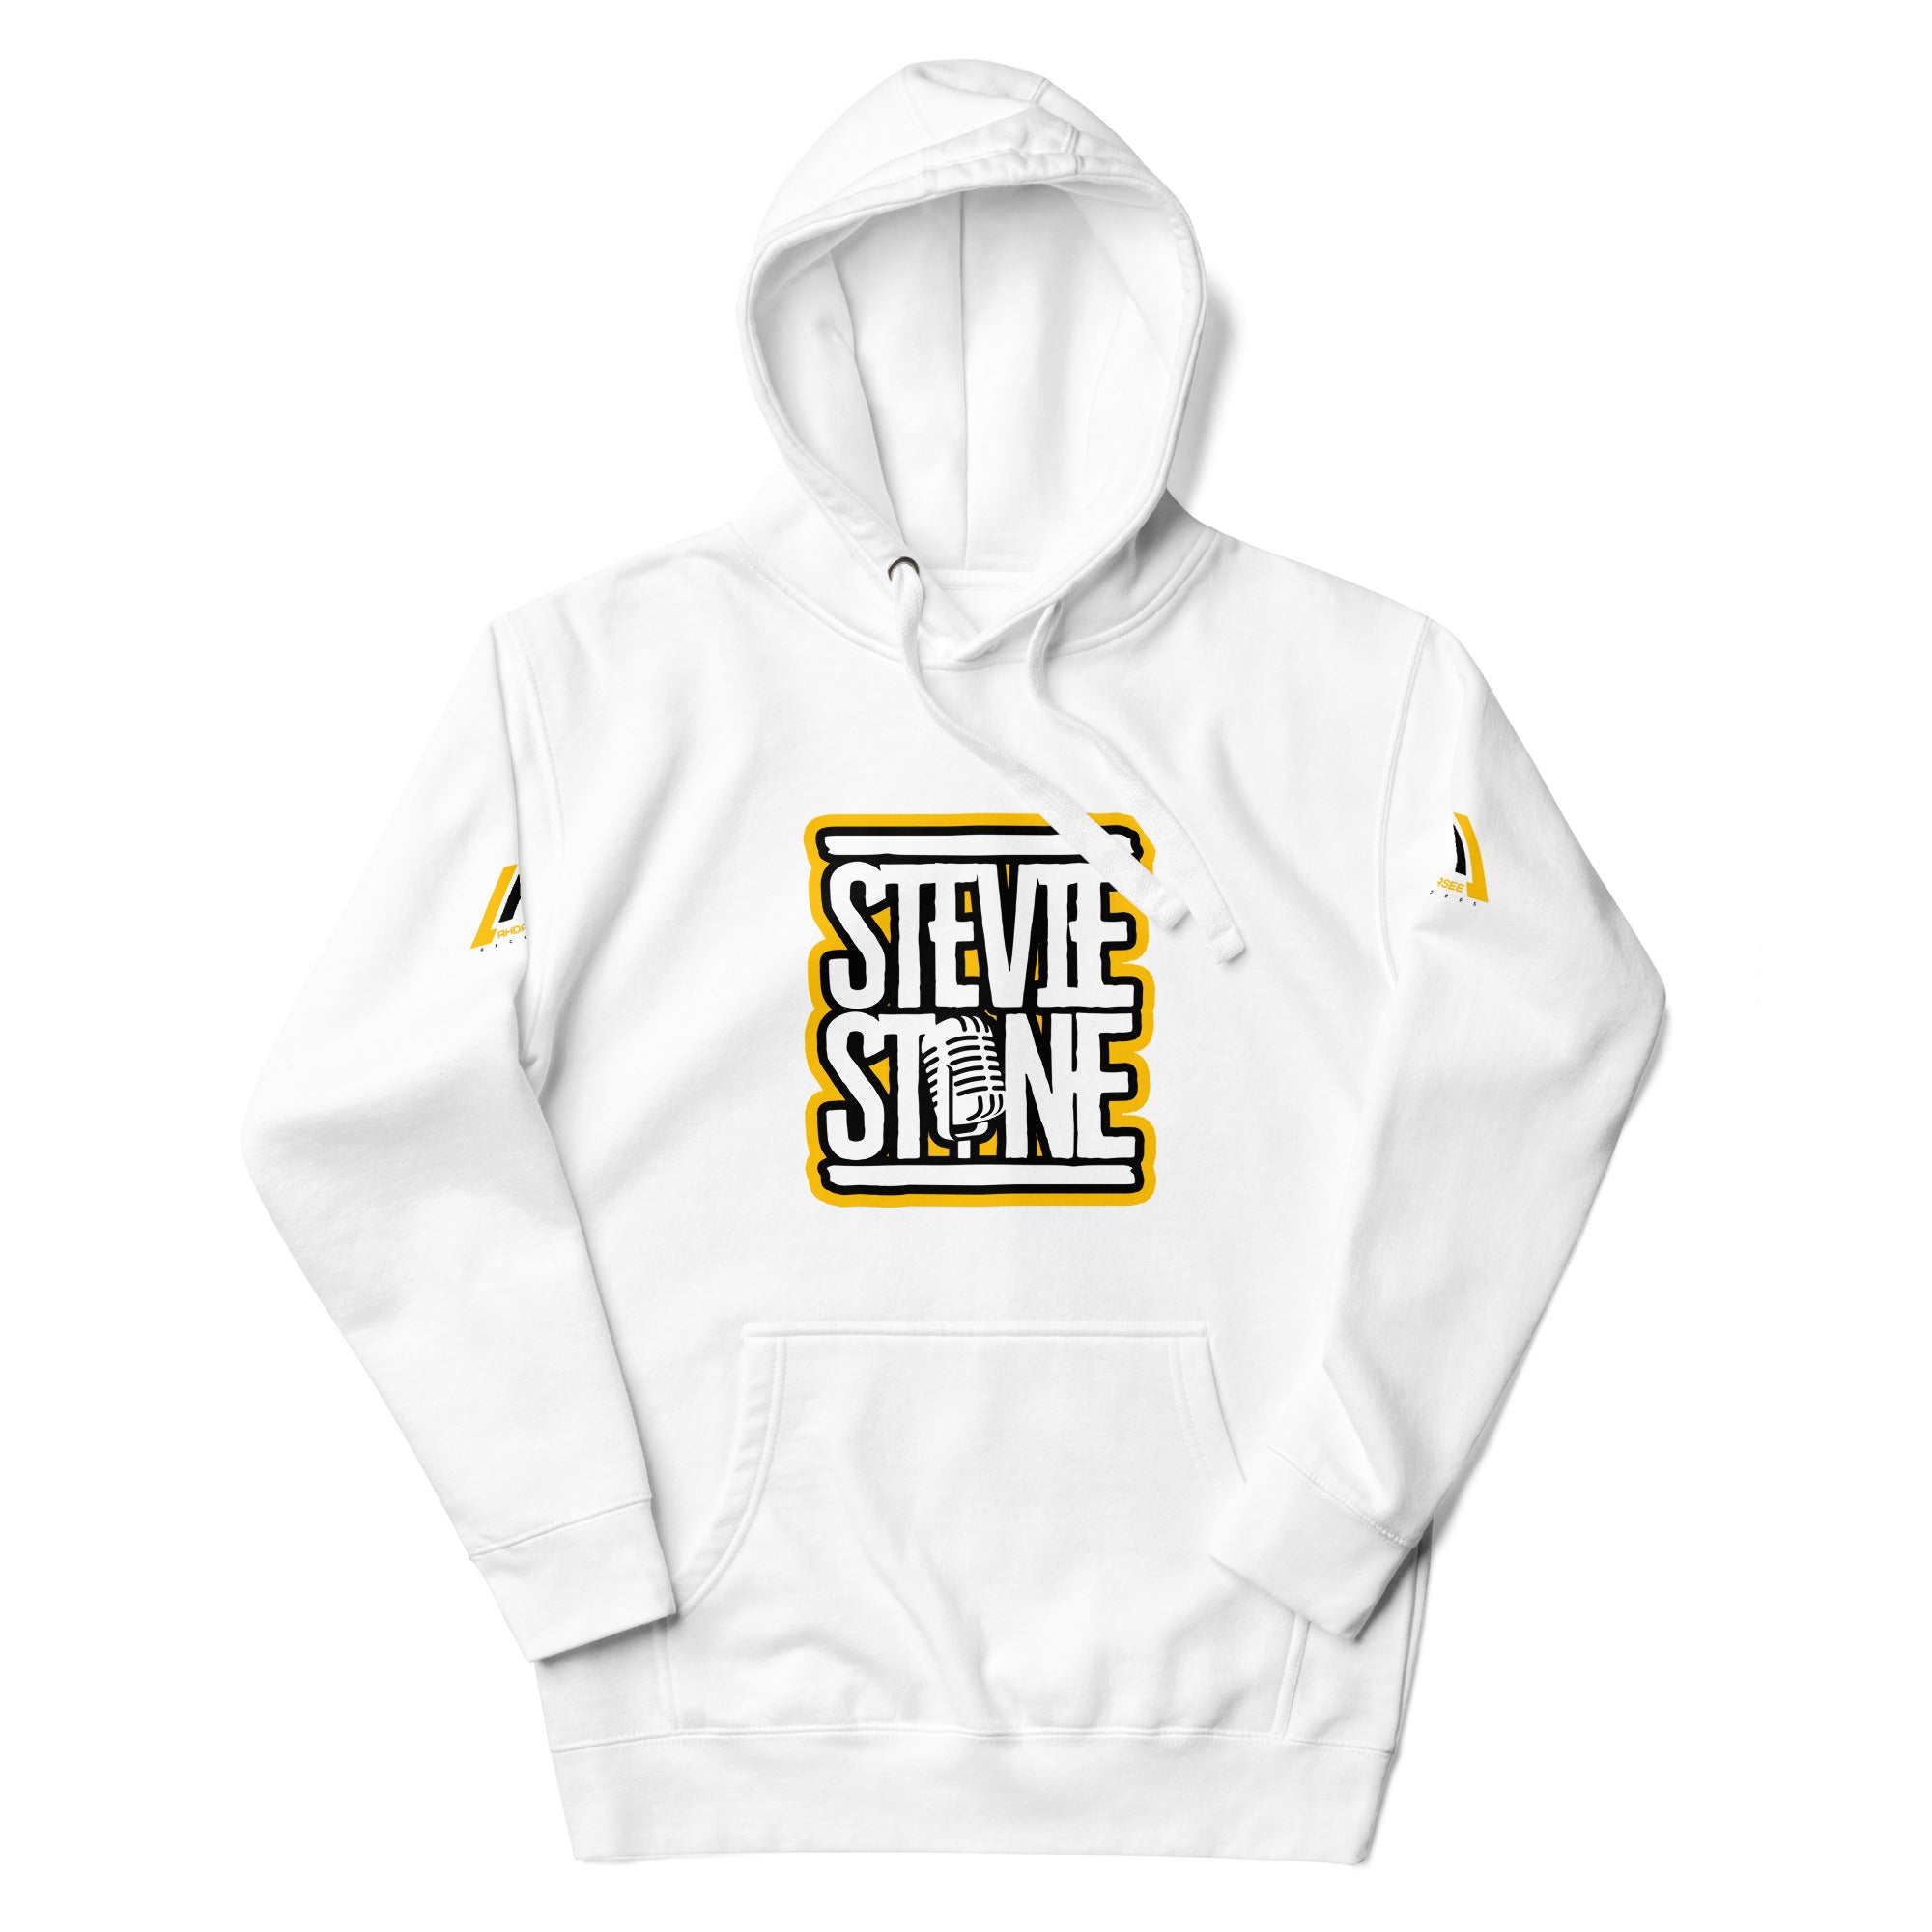 Stevie Stone Unisex Hoodie (White, Black and Yellow)